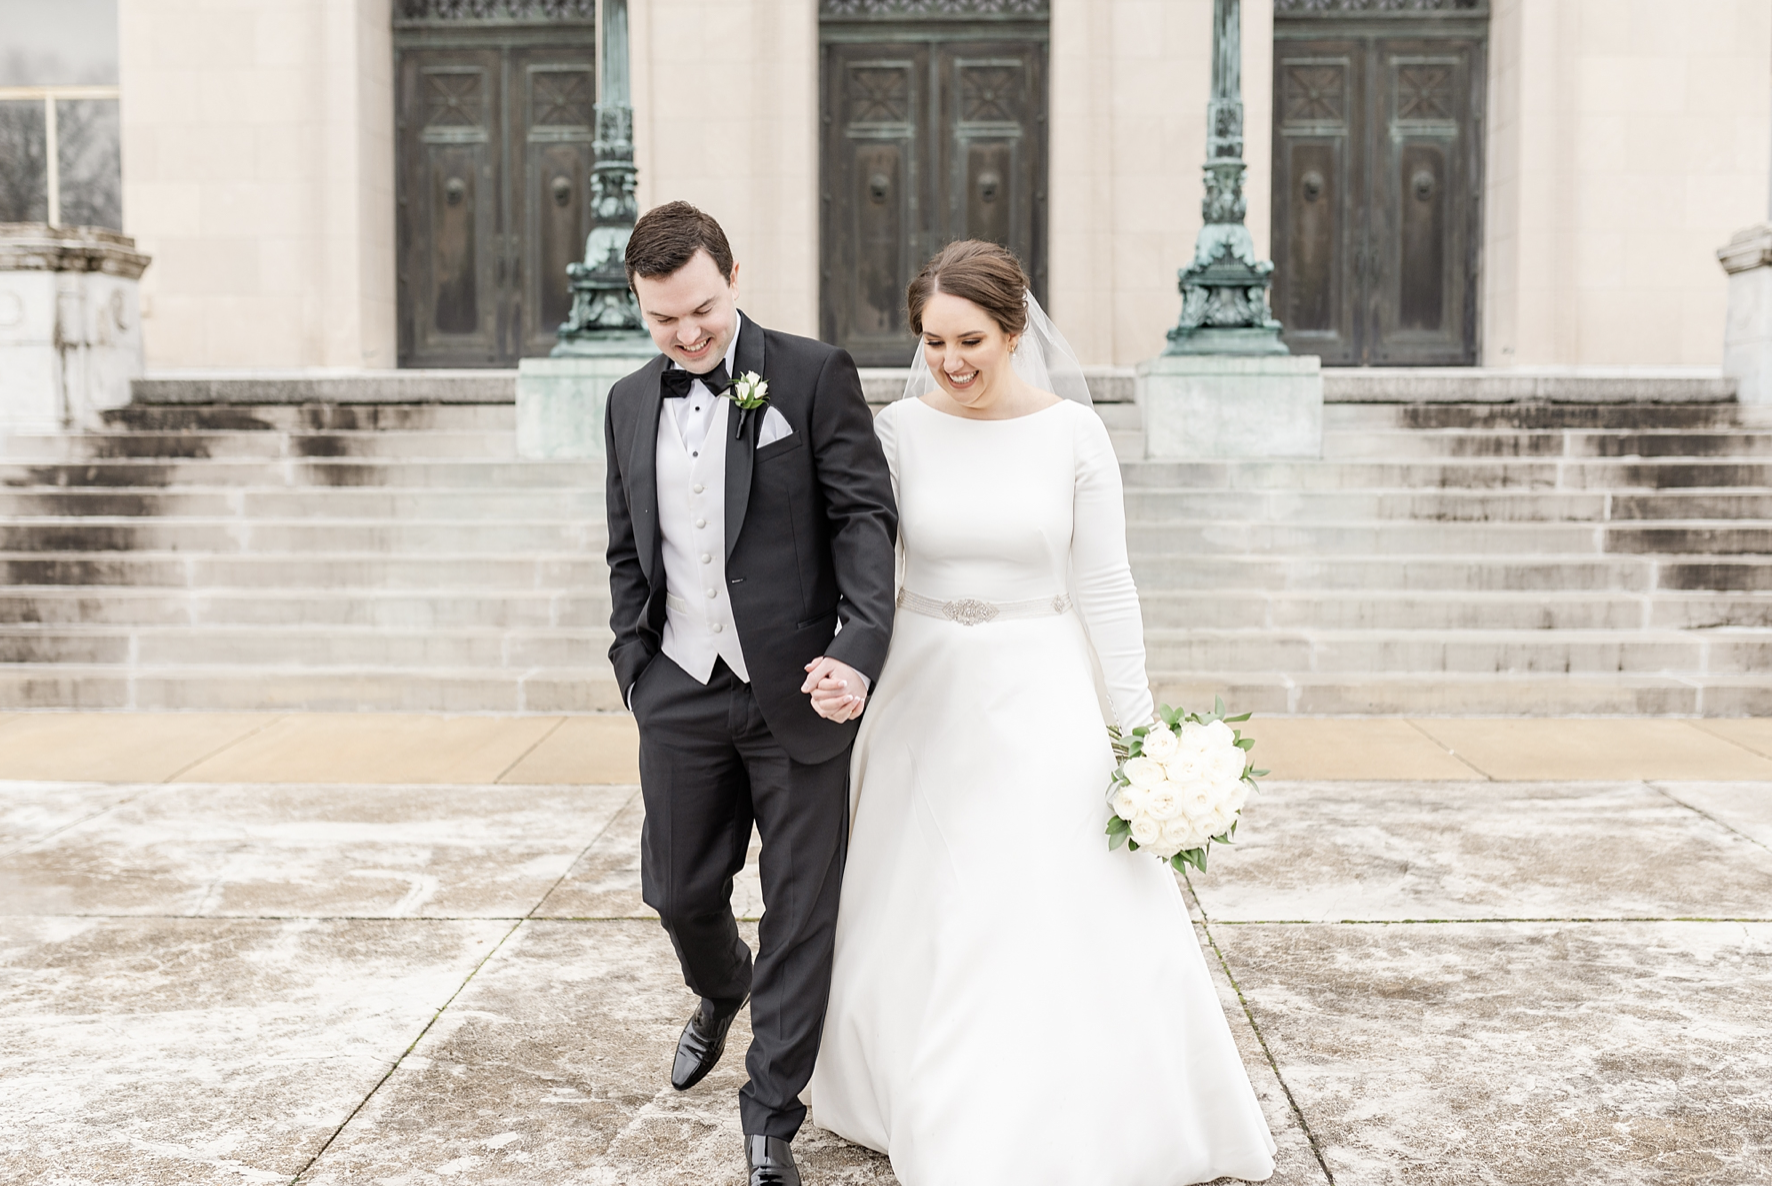 Dayton-Cincinnati-wedding-planner_dayton-masonic-center_0055.png